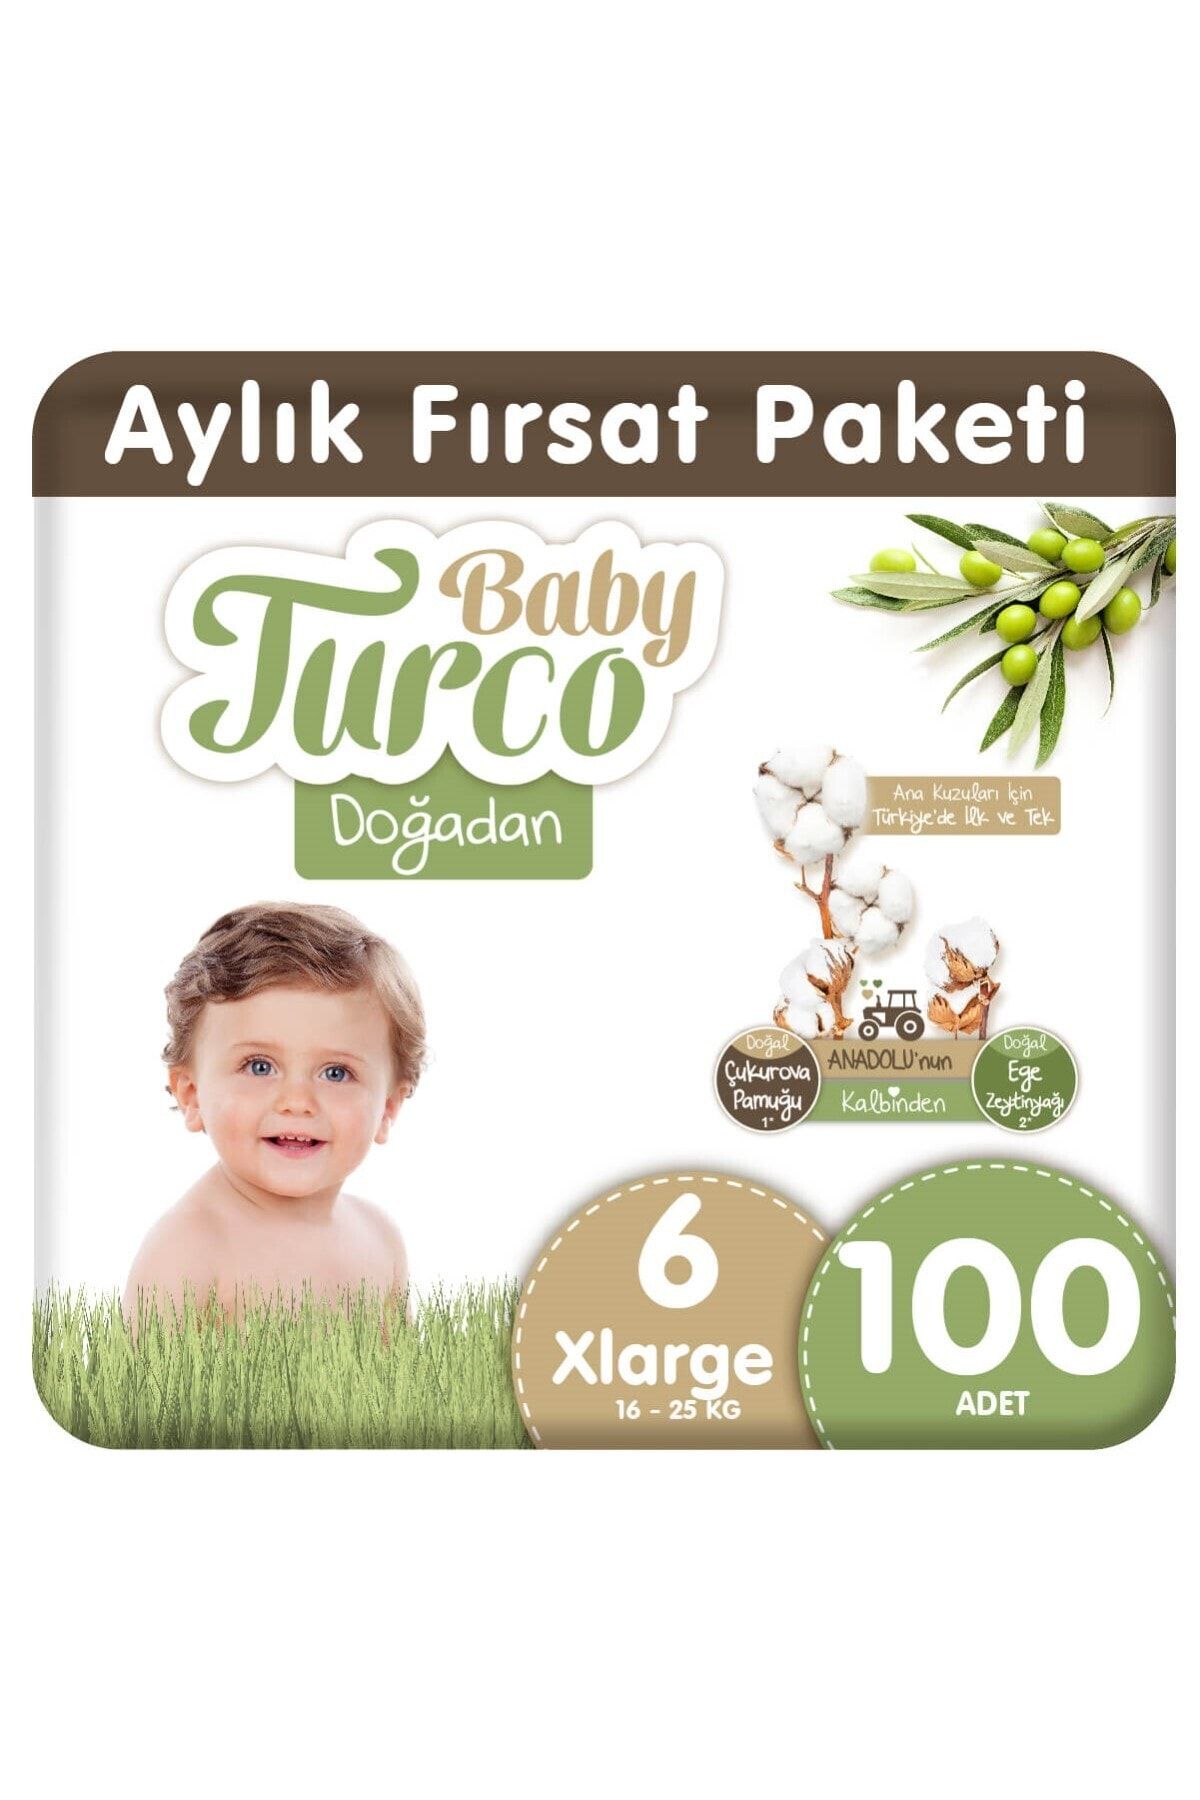 Baby Turco Doğadan 6 Numara Xlarge 100 Adet